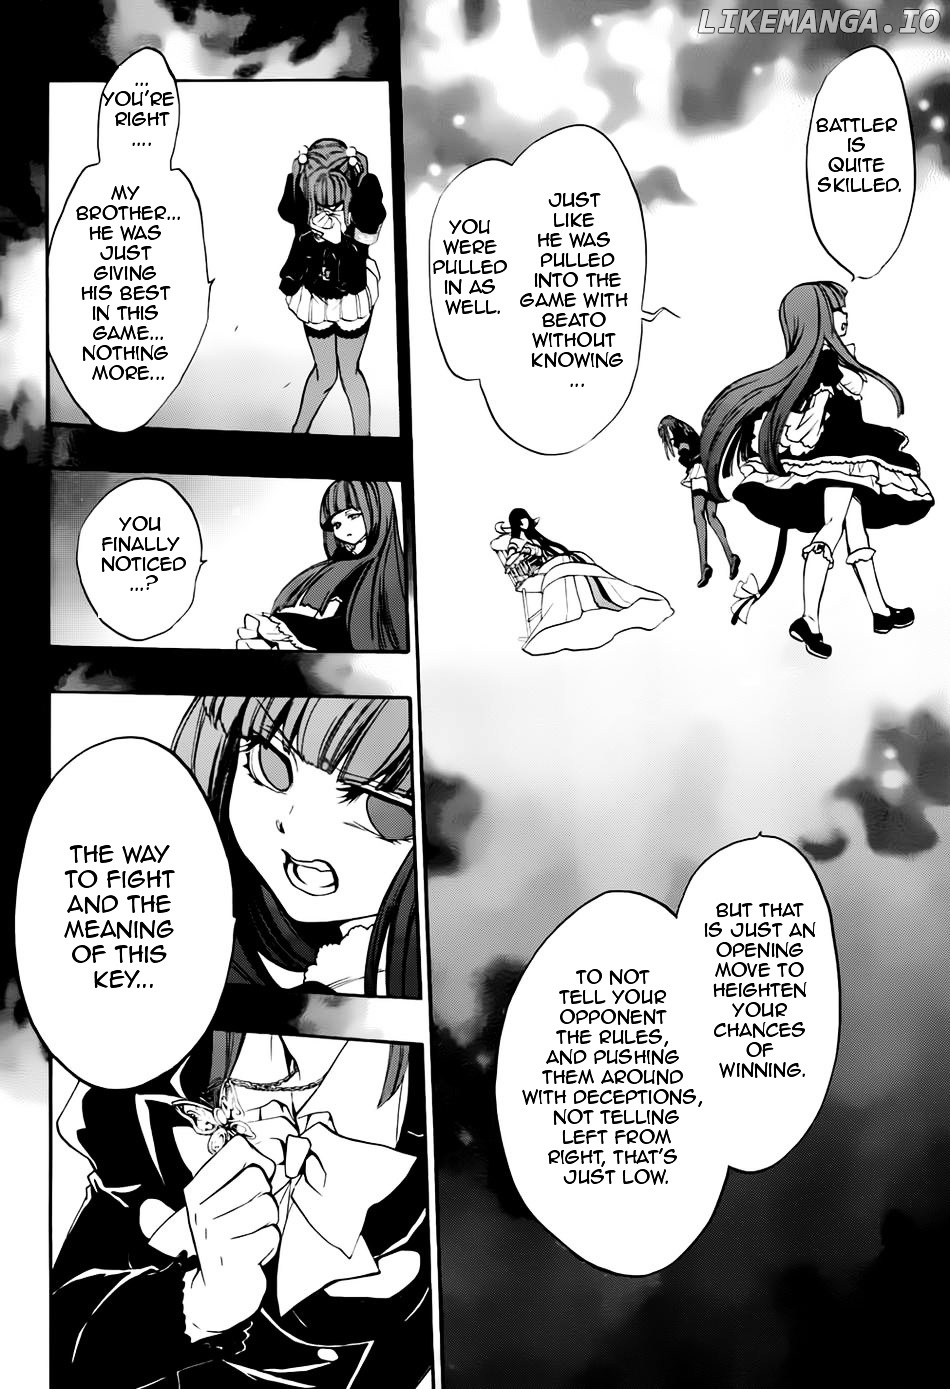 Umineko no Naku Koro ni Chiru Episode 8: Twilight of the Golden Witch chapter 15 - page 29